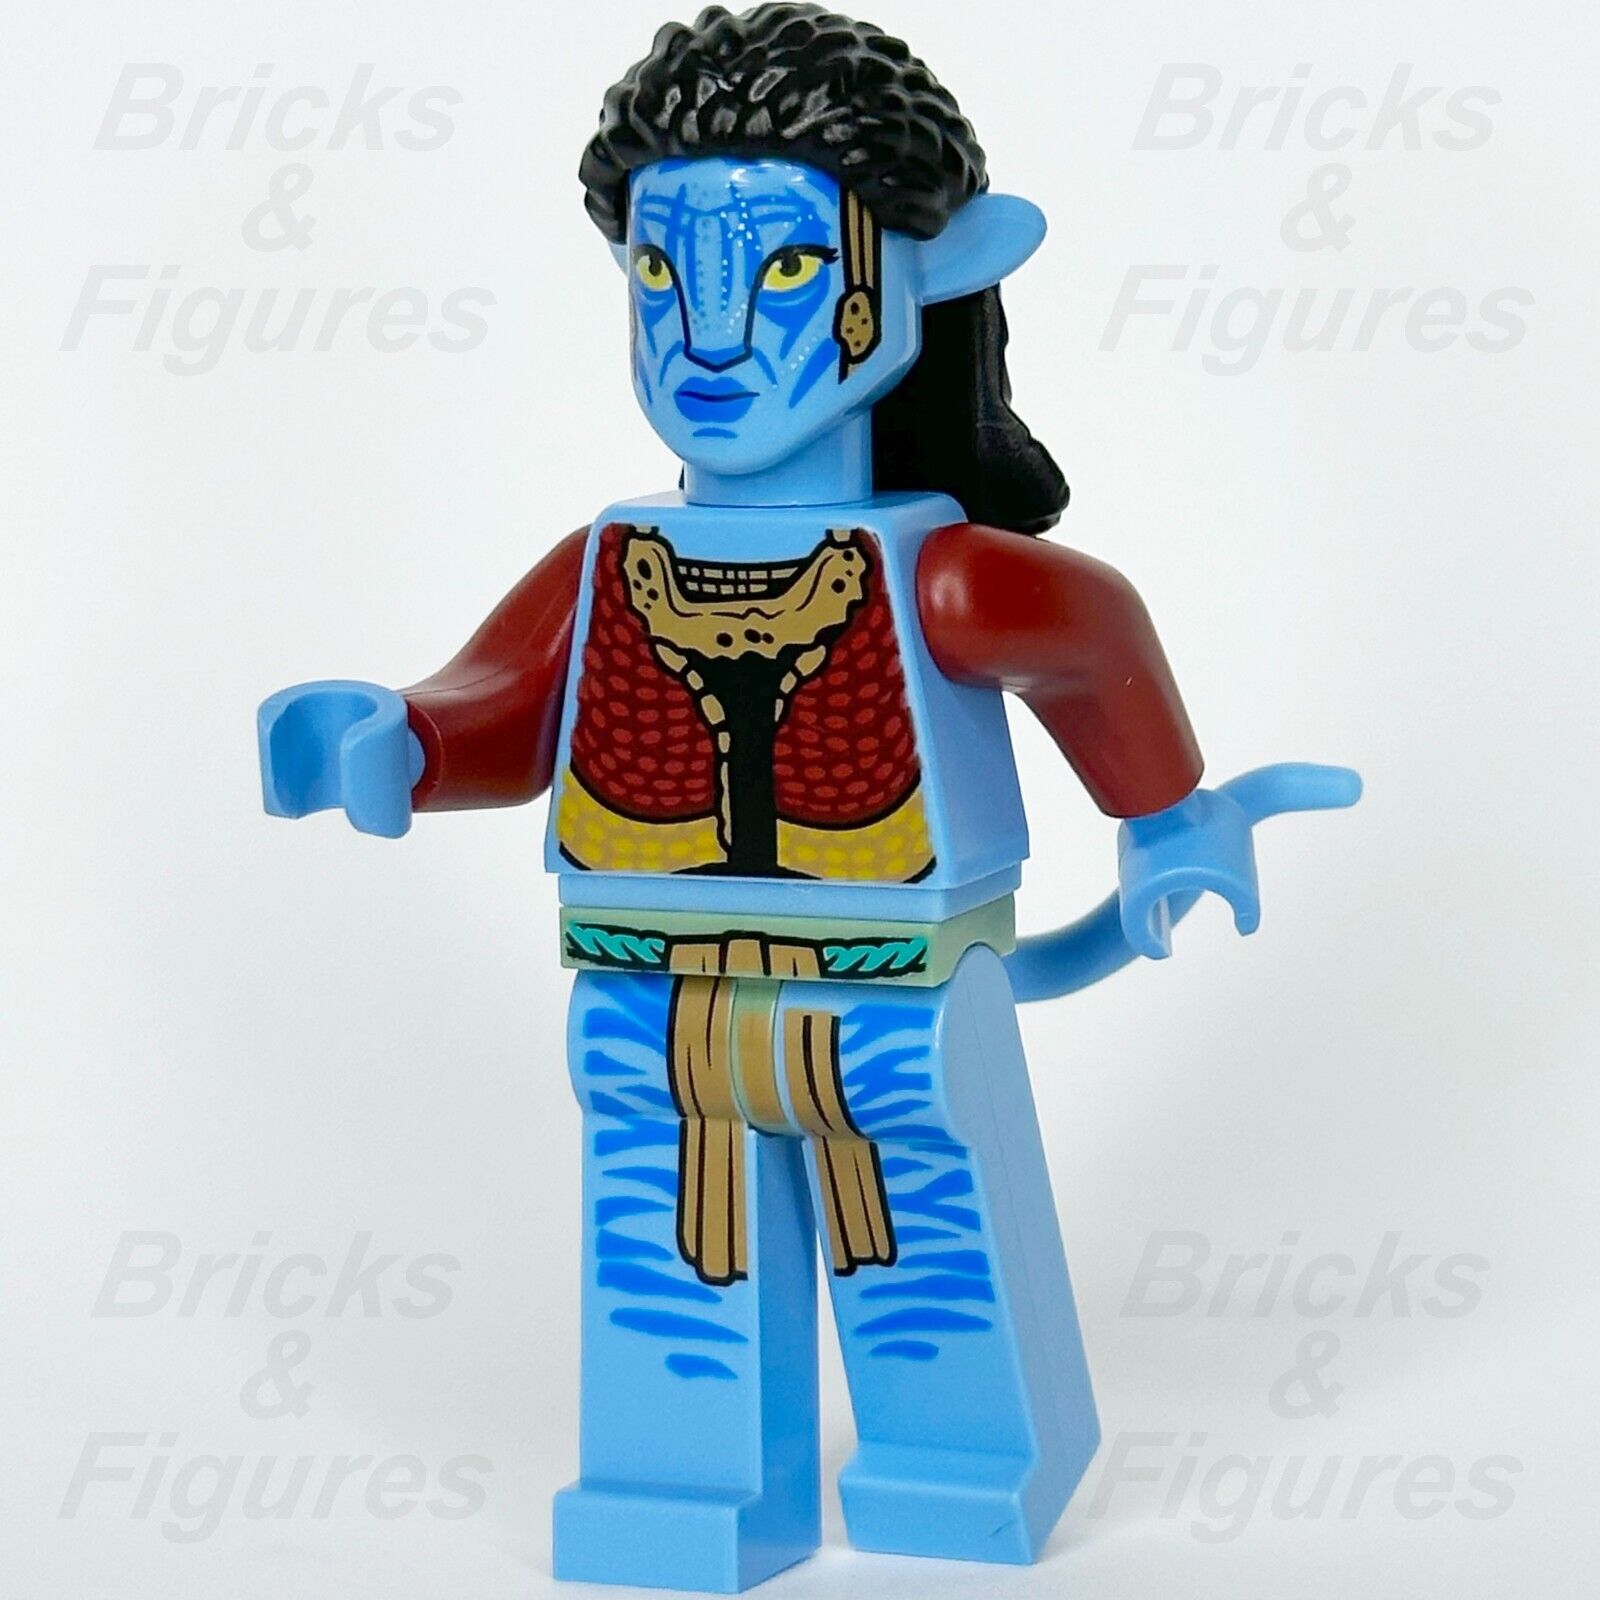 LEGO Avatar Jake Sully Na'vi Minifigure avt011 75573 + Bow - NEW 